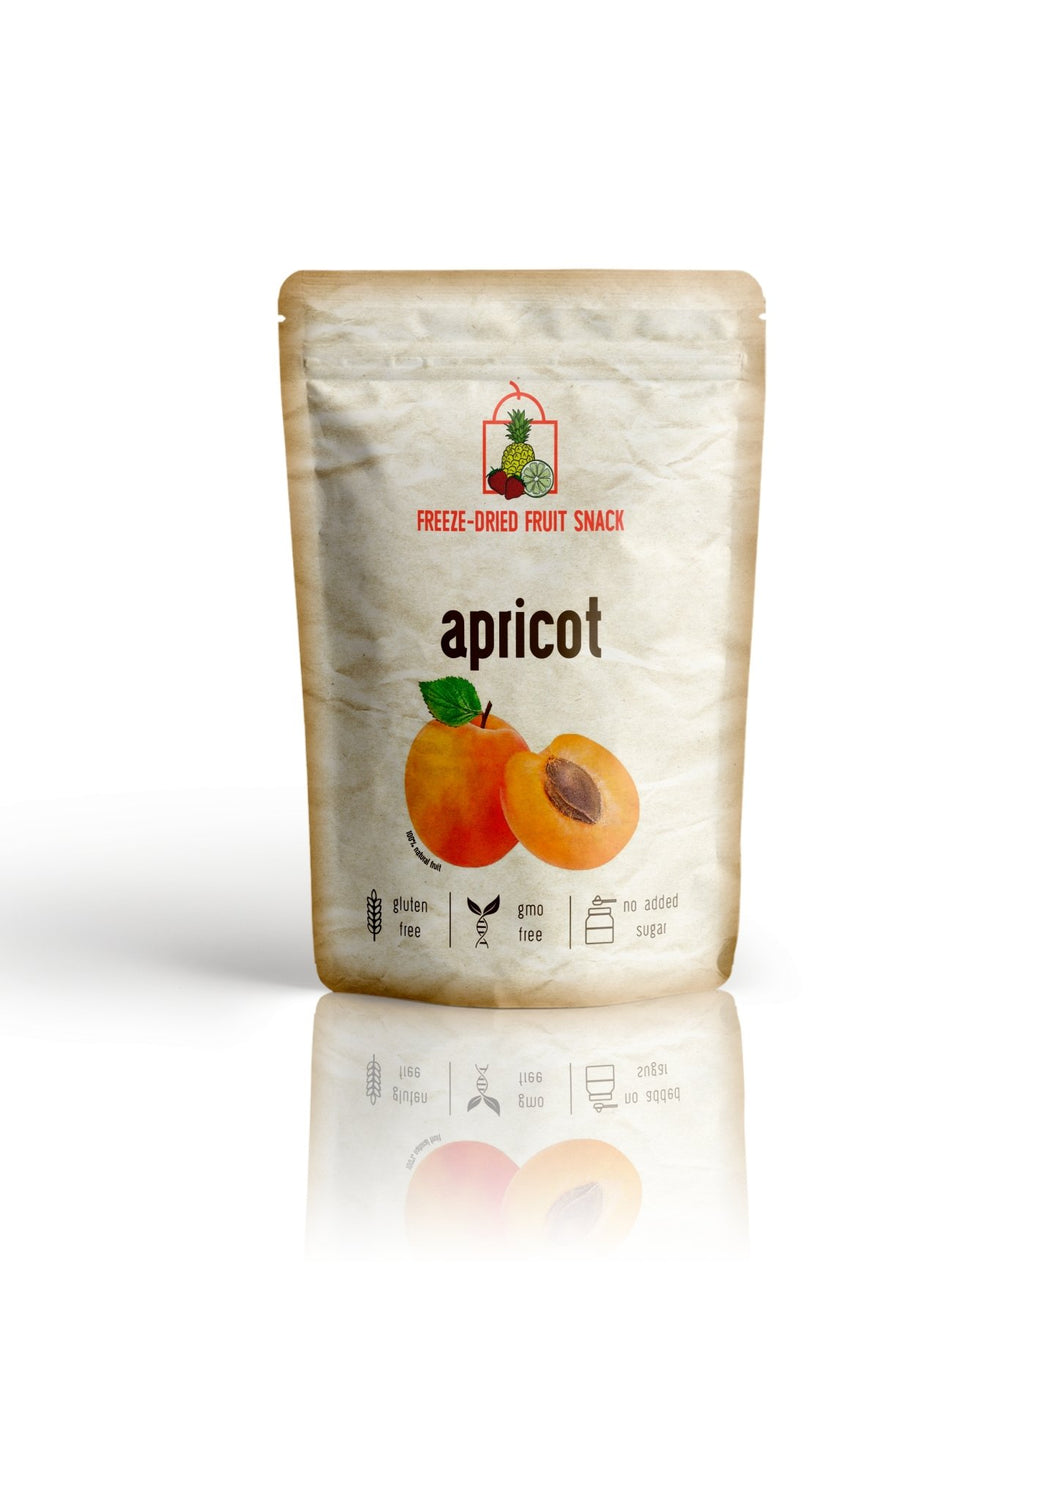 The Rotten Fruit Box - Freeze Dried Apricot (Sour) Snack Pouch by The Rotten Fruit Box - Farm2Me - carro-6366960 - 5600811500307 -